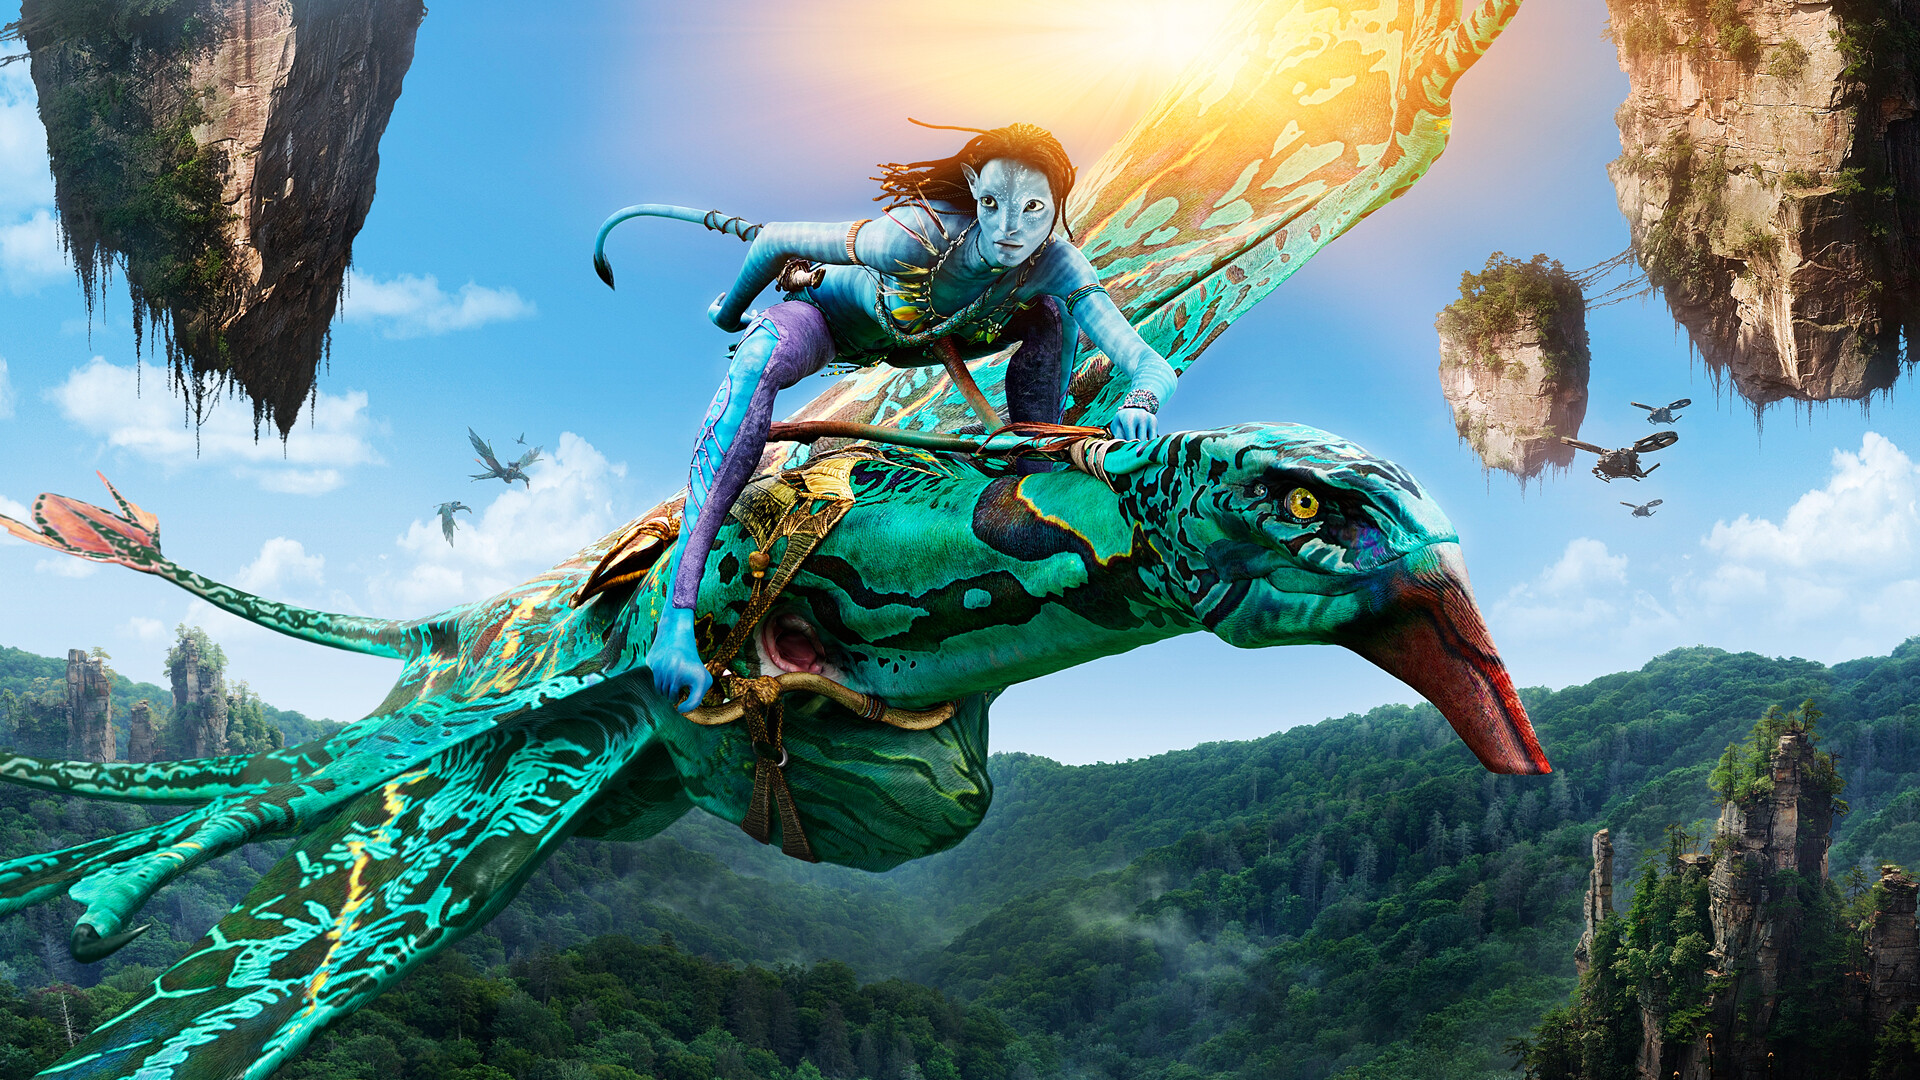 Avatar: James Cameron's Academy Award-winning 2009 epic adventure film. 1920x1080 Full HD Background.